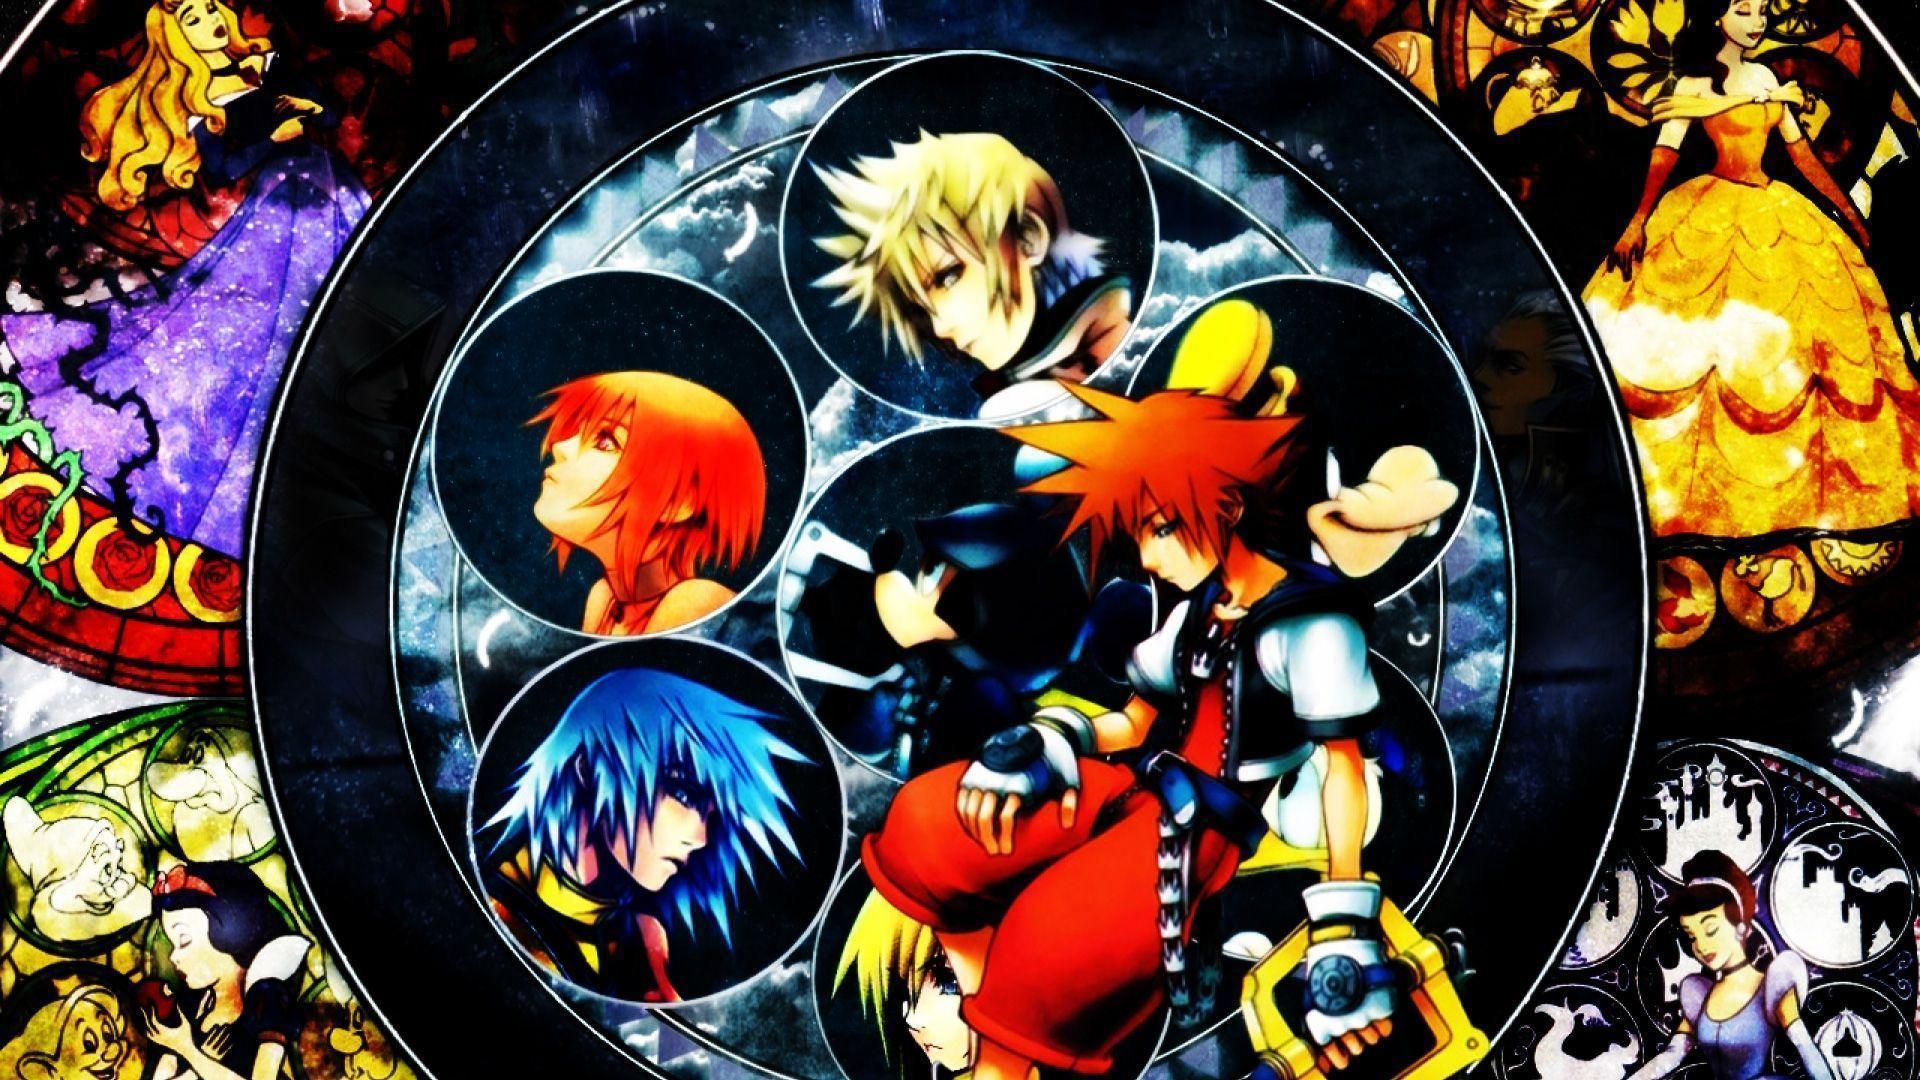 Free Kingdom Hearts Wallpaper in 1920x1080